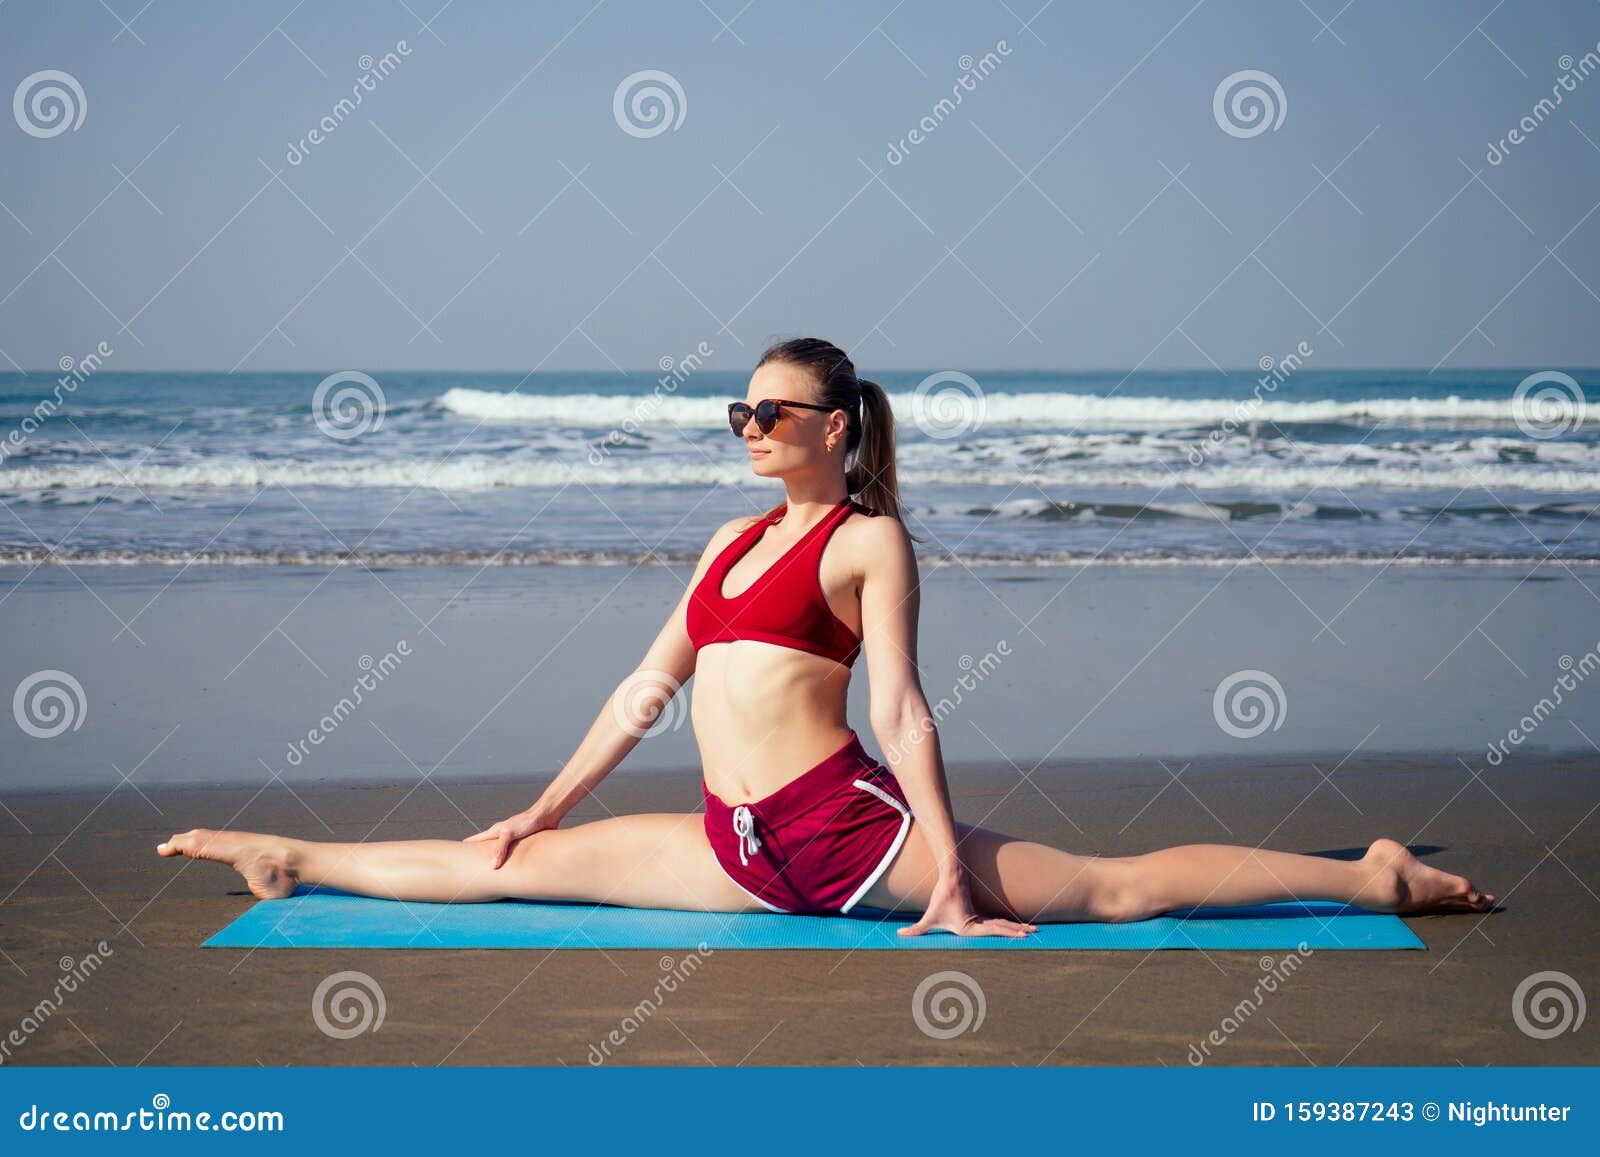 Muladhara Swadhisthana Manipula Tantra Yoga on the Beach Woman Meditates  Sitting on the Sand Yoga Mat by the Sea at Stock Image - Image of female,  equilibrist: 159387243